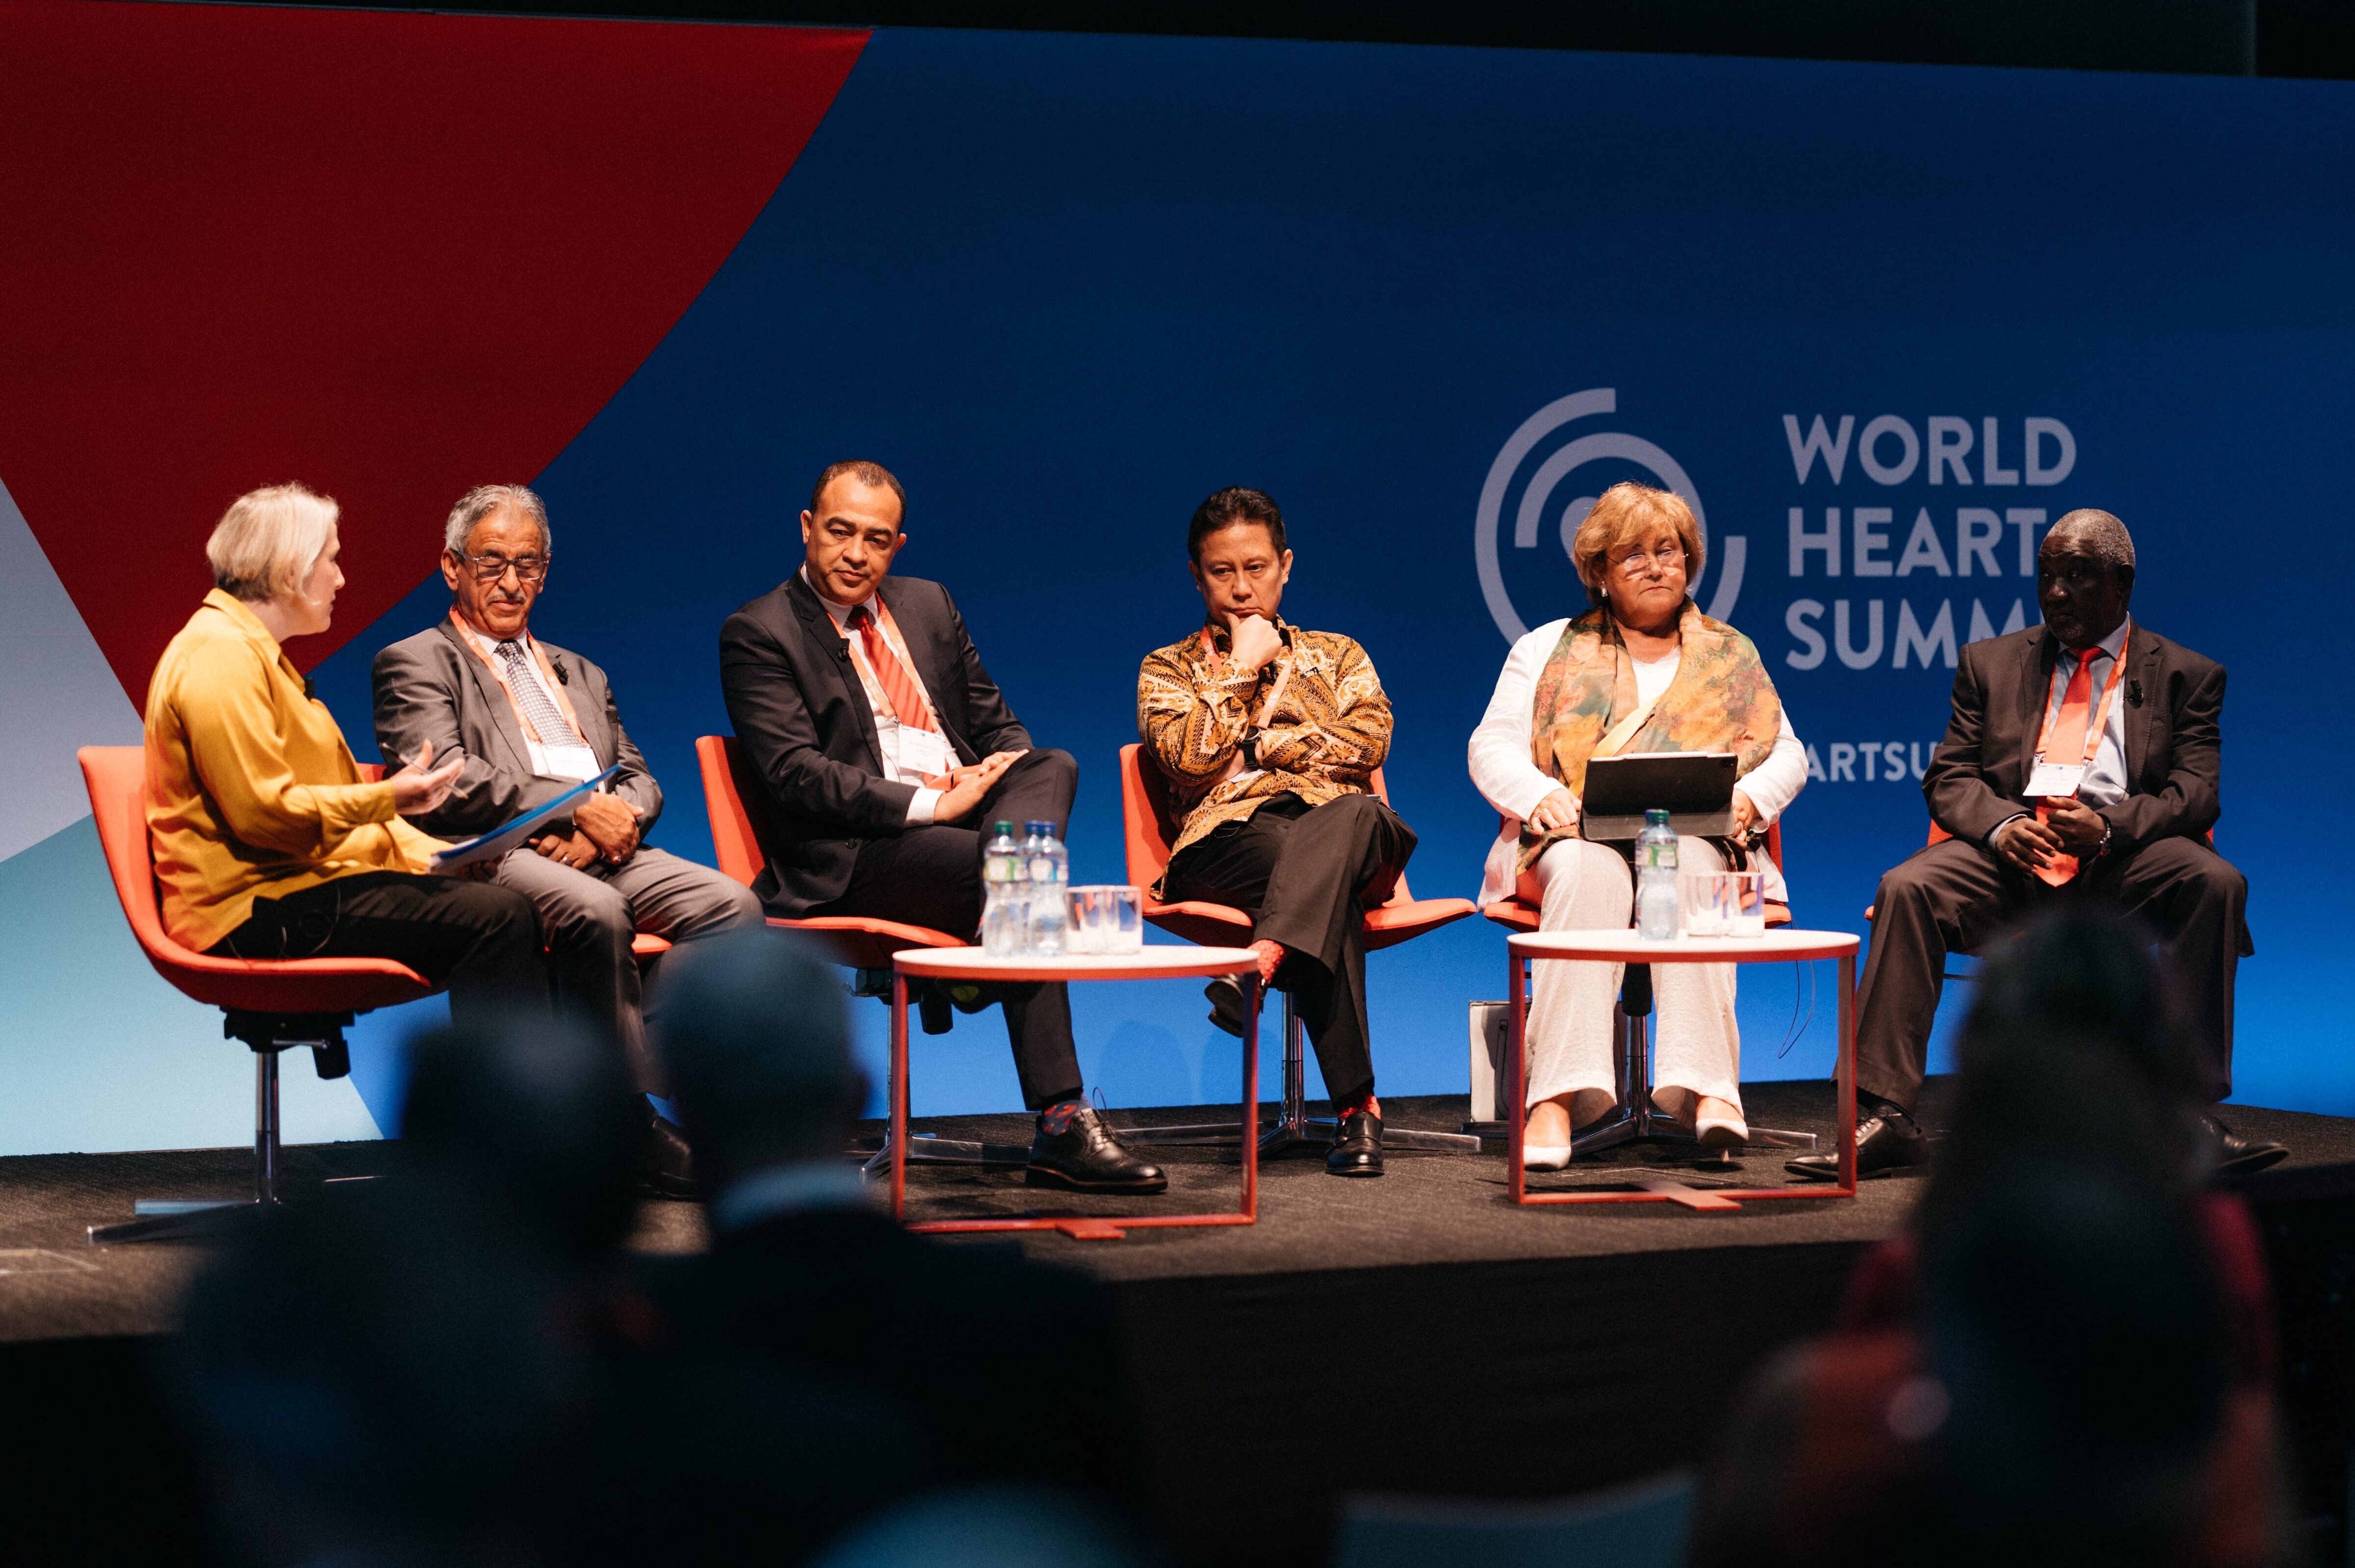 World Heart Summit 2023 will be held in Geneva ahead of the World Health Assembly